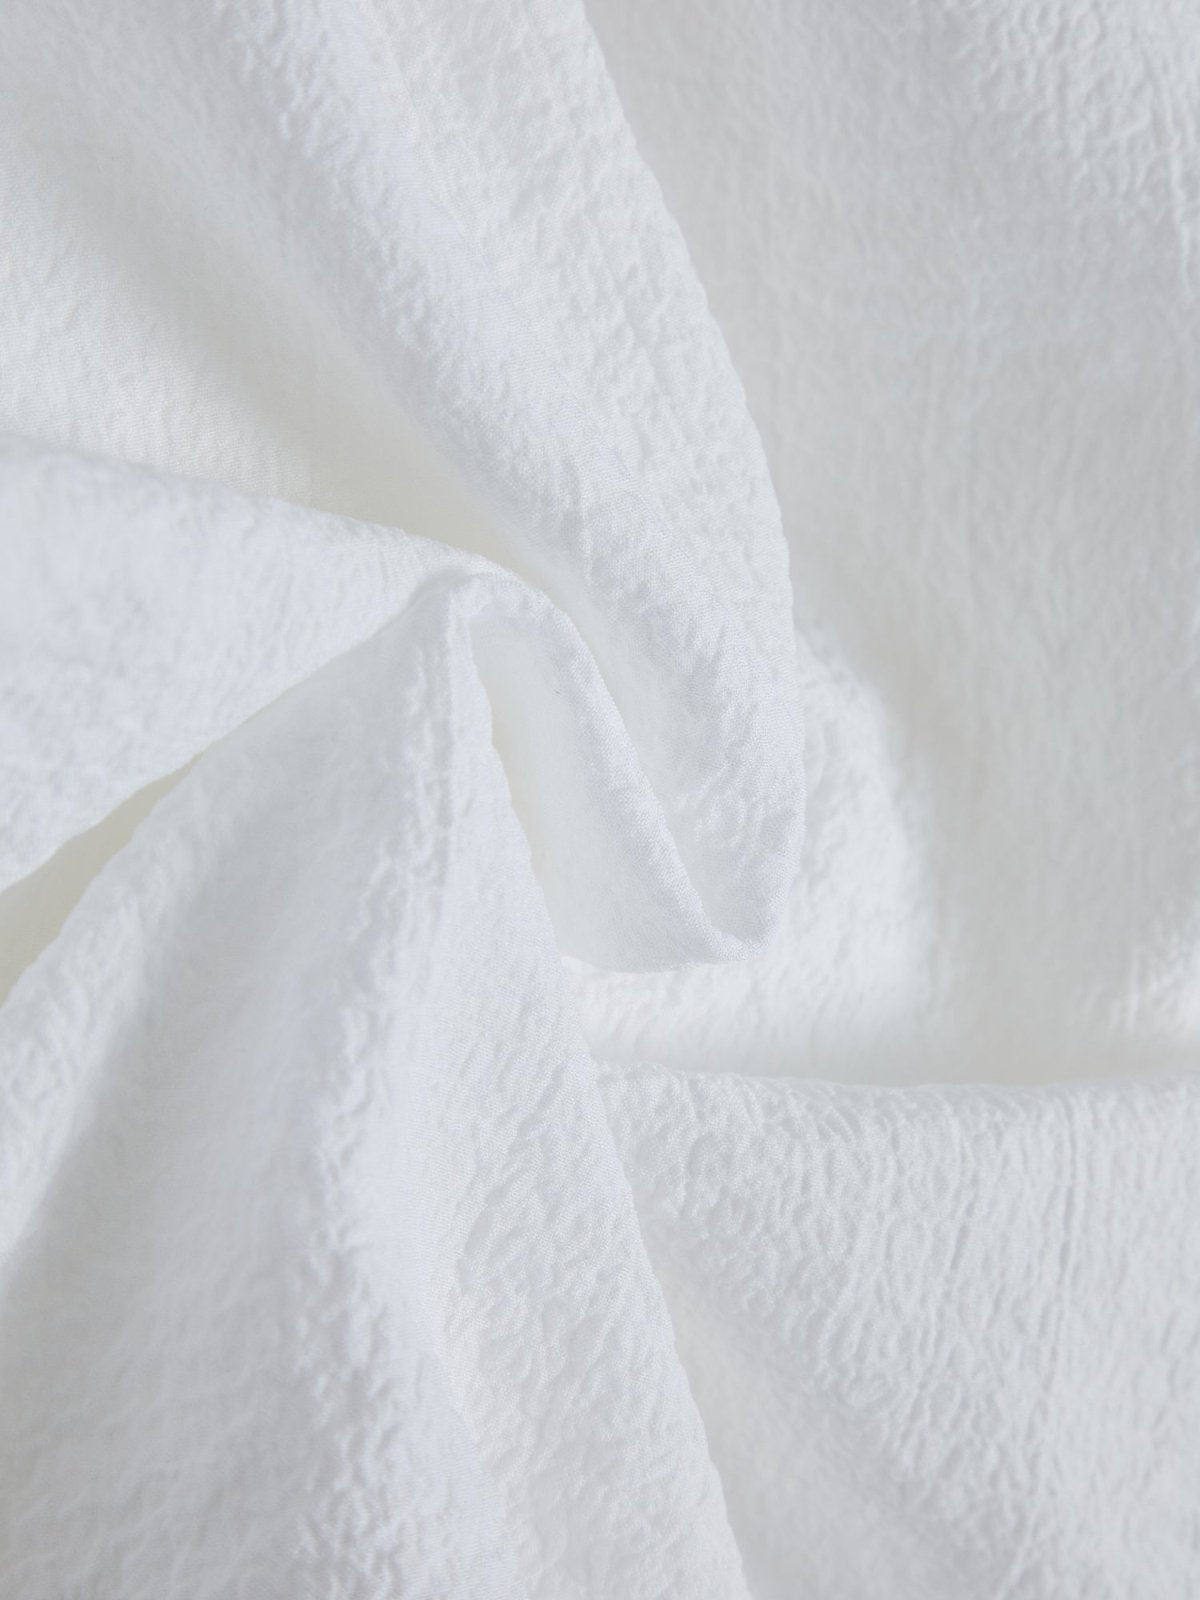 Textured Shirt Dress IVORY - DAG-DD8664-21IvoryS - Marshmallow White - S - D'ZAGE Designs